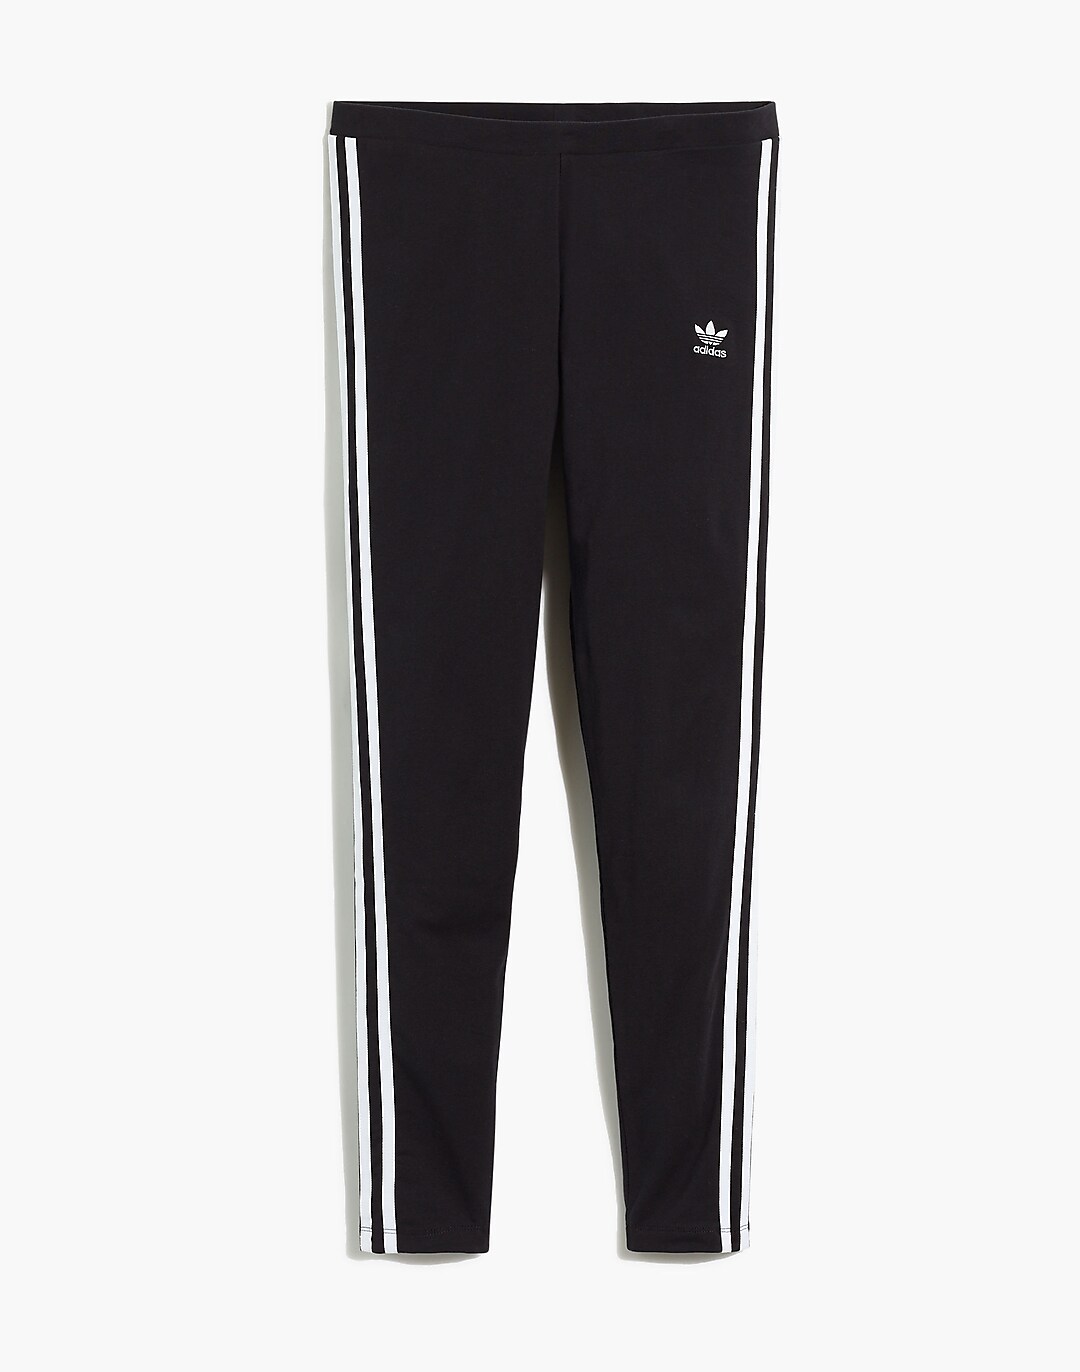 Adidas Women's LOUNGEWEAR Essentials 3-Stripes Leggings Size XS